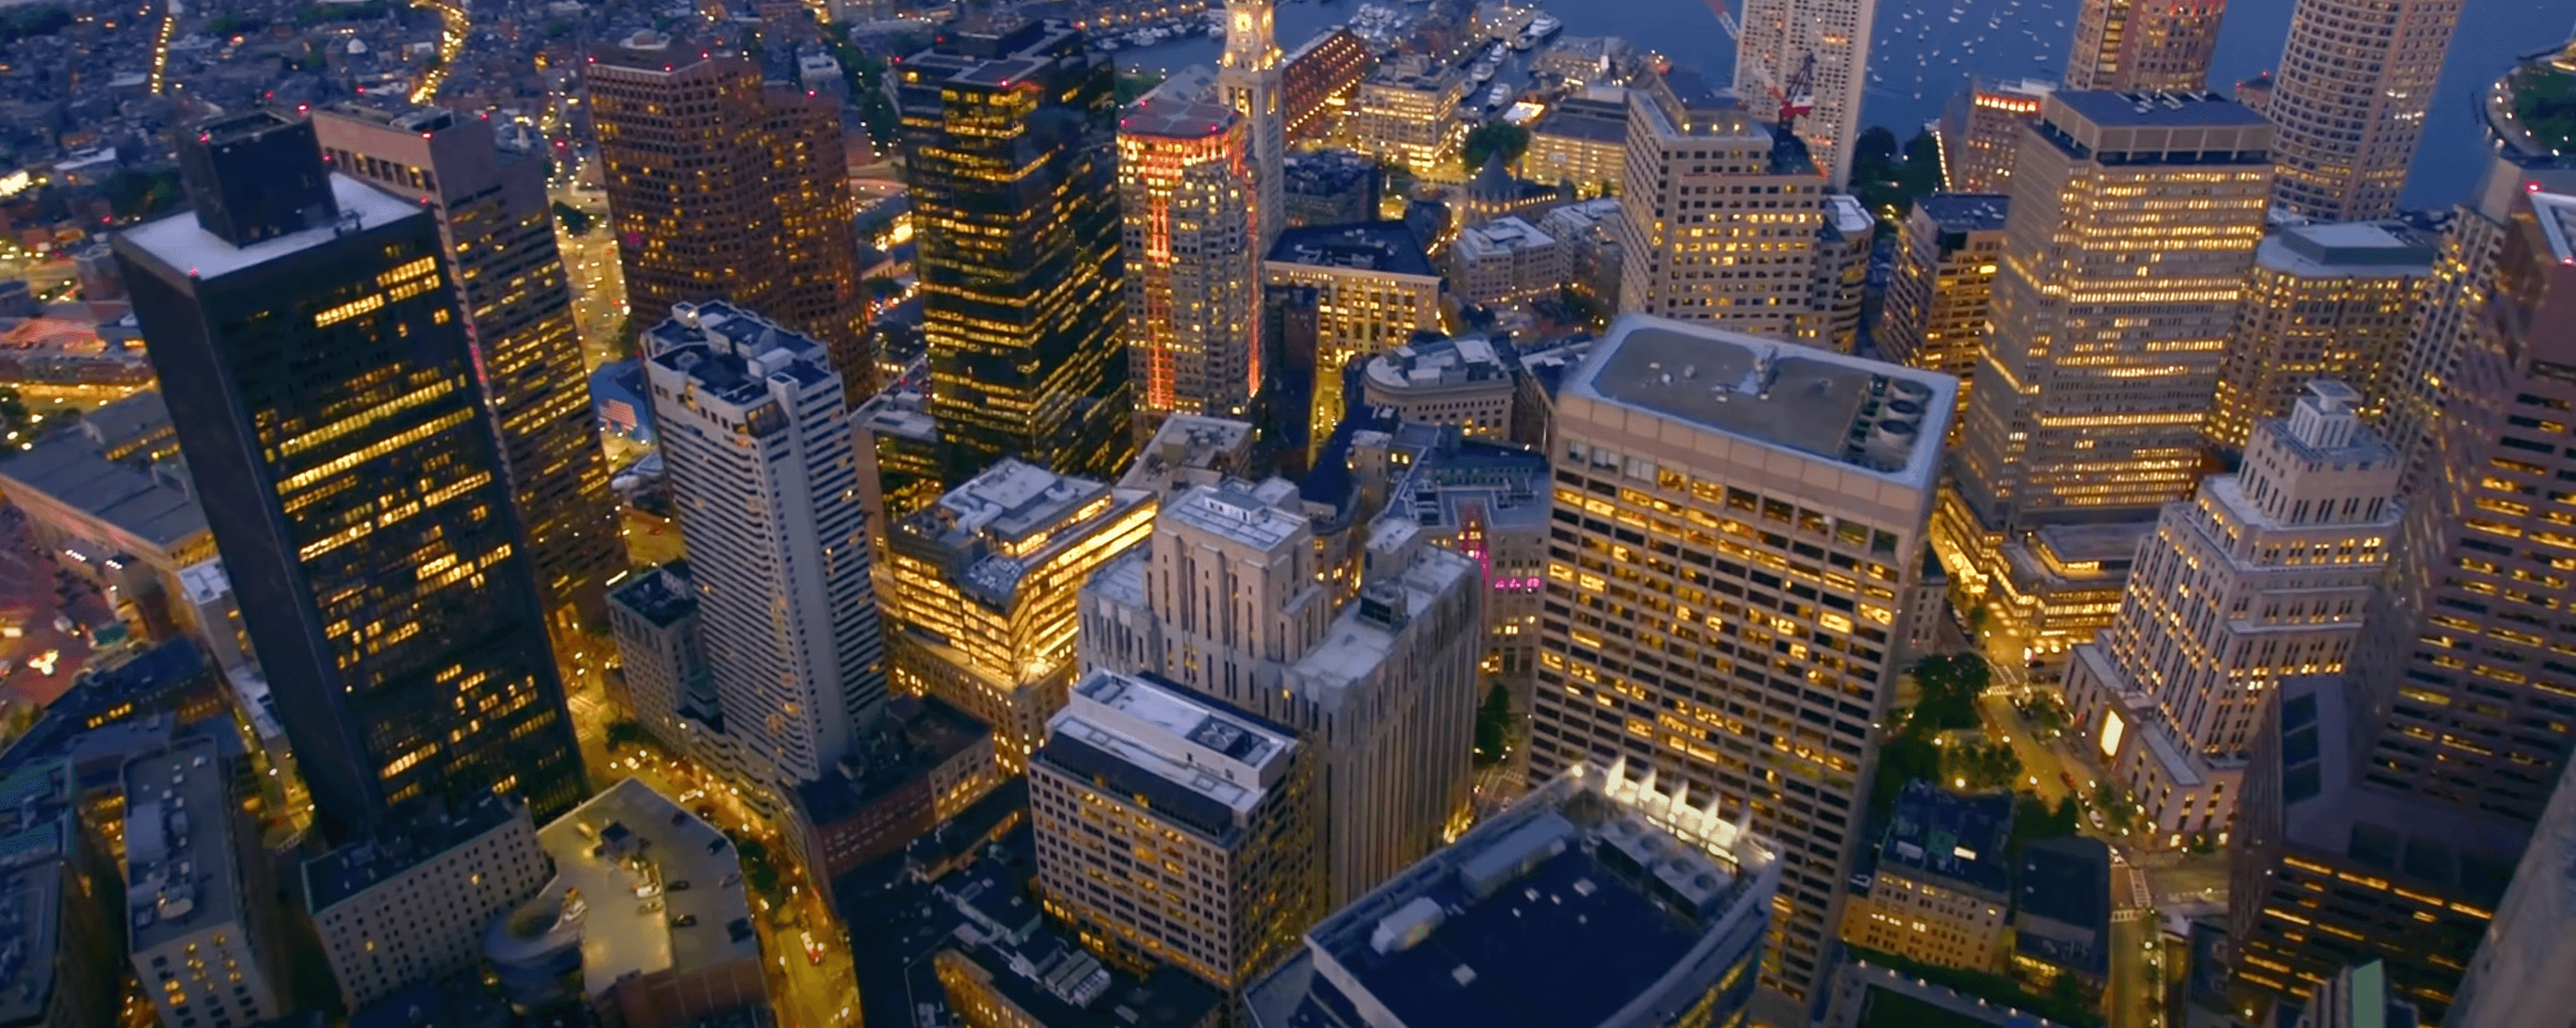 aerial view of Boston